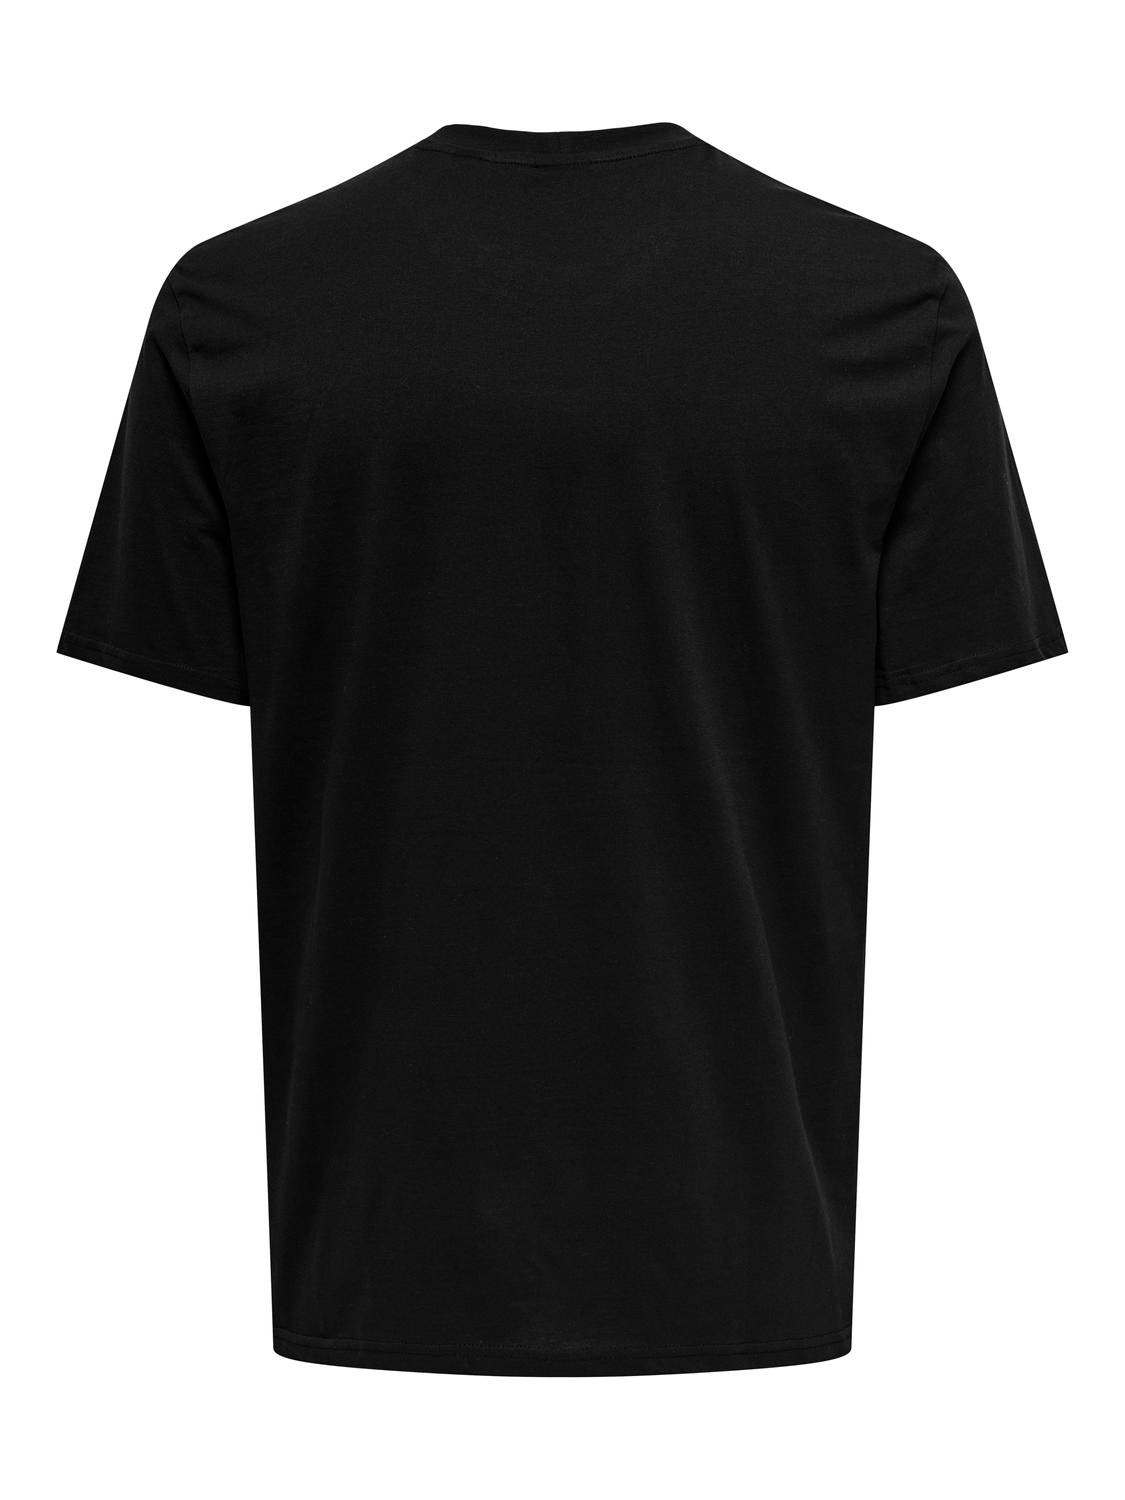 ONLY & SONS Normal geschnitten Rundhals T-Shirt -Black - 22028147